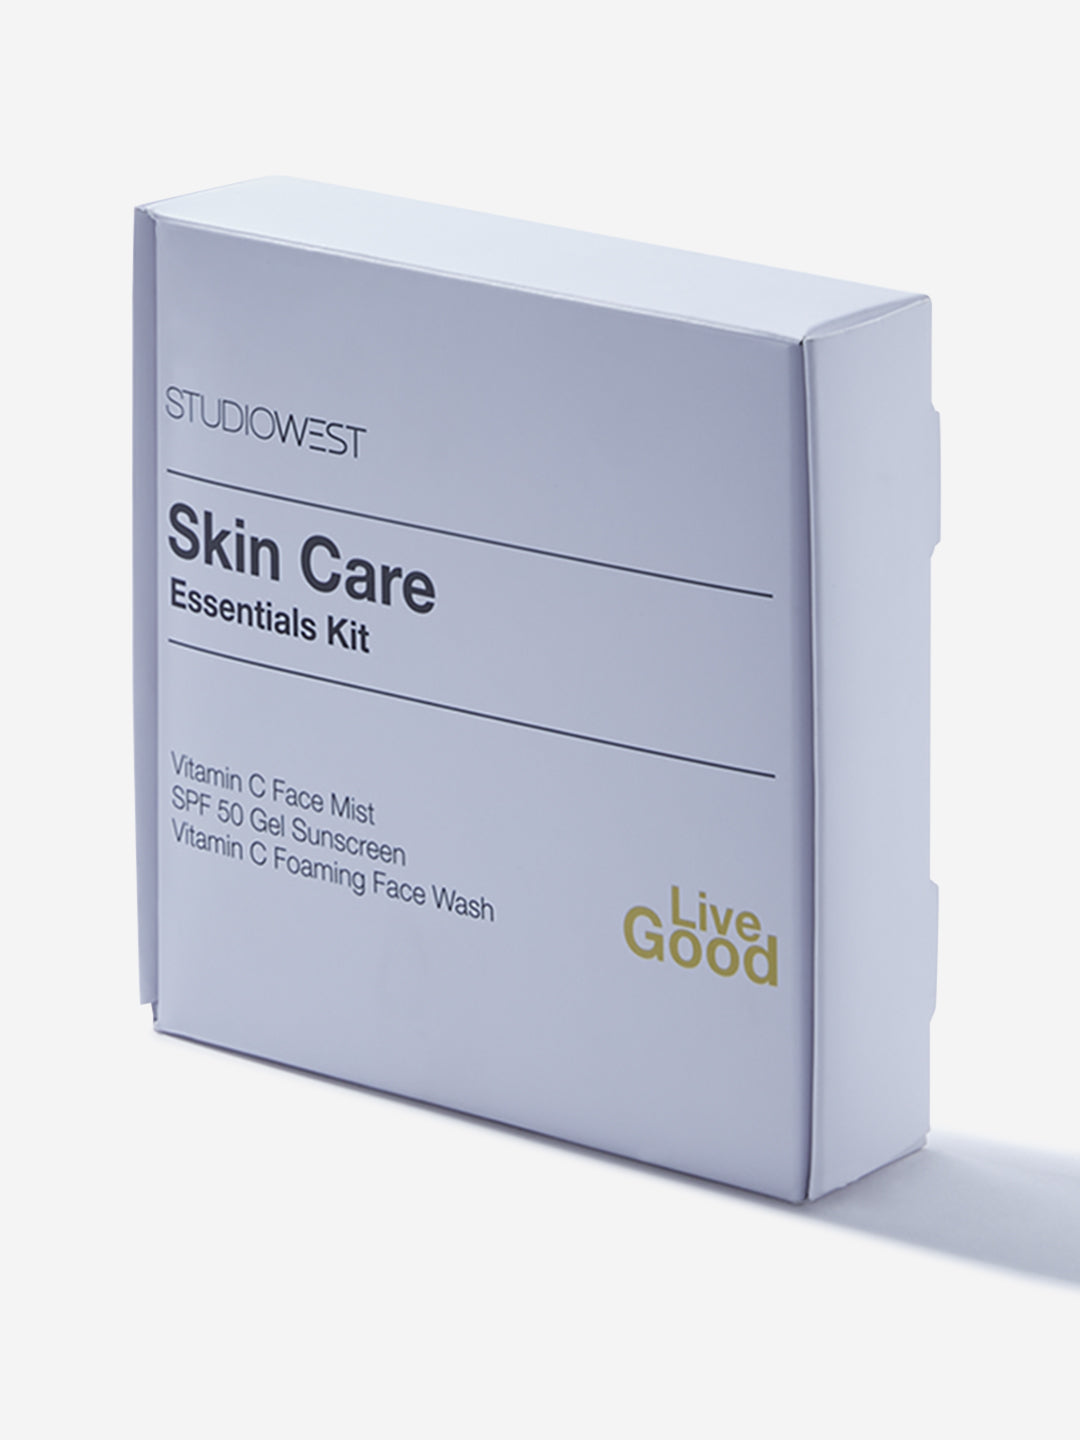 Studiowest Skincare Essentials Kit